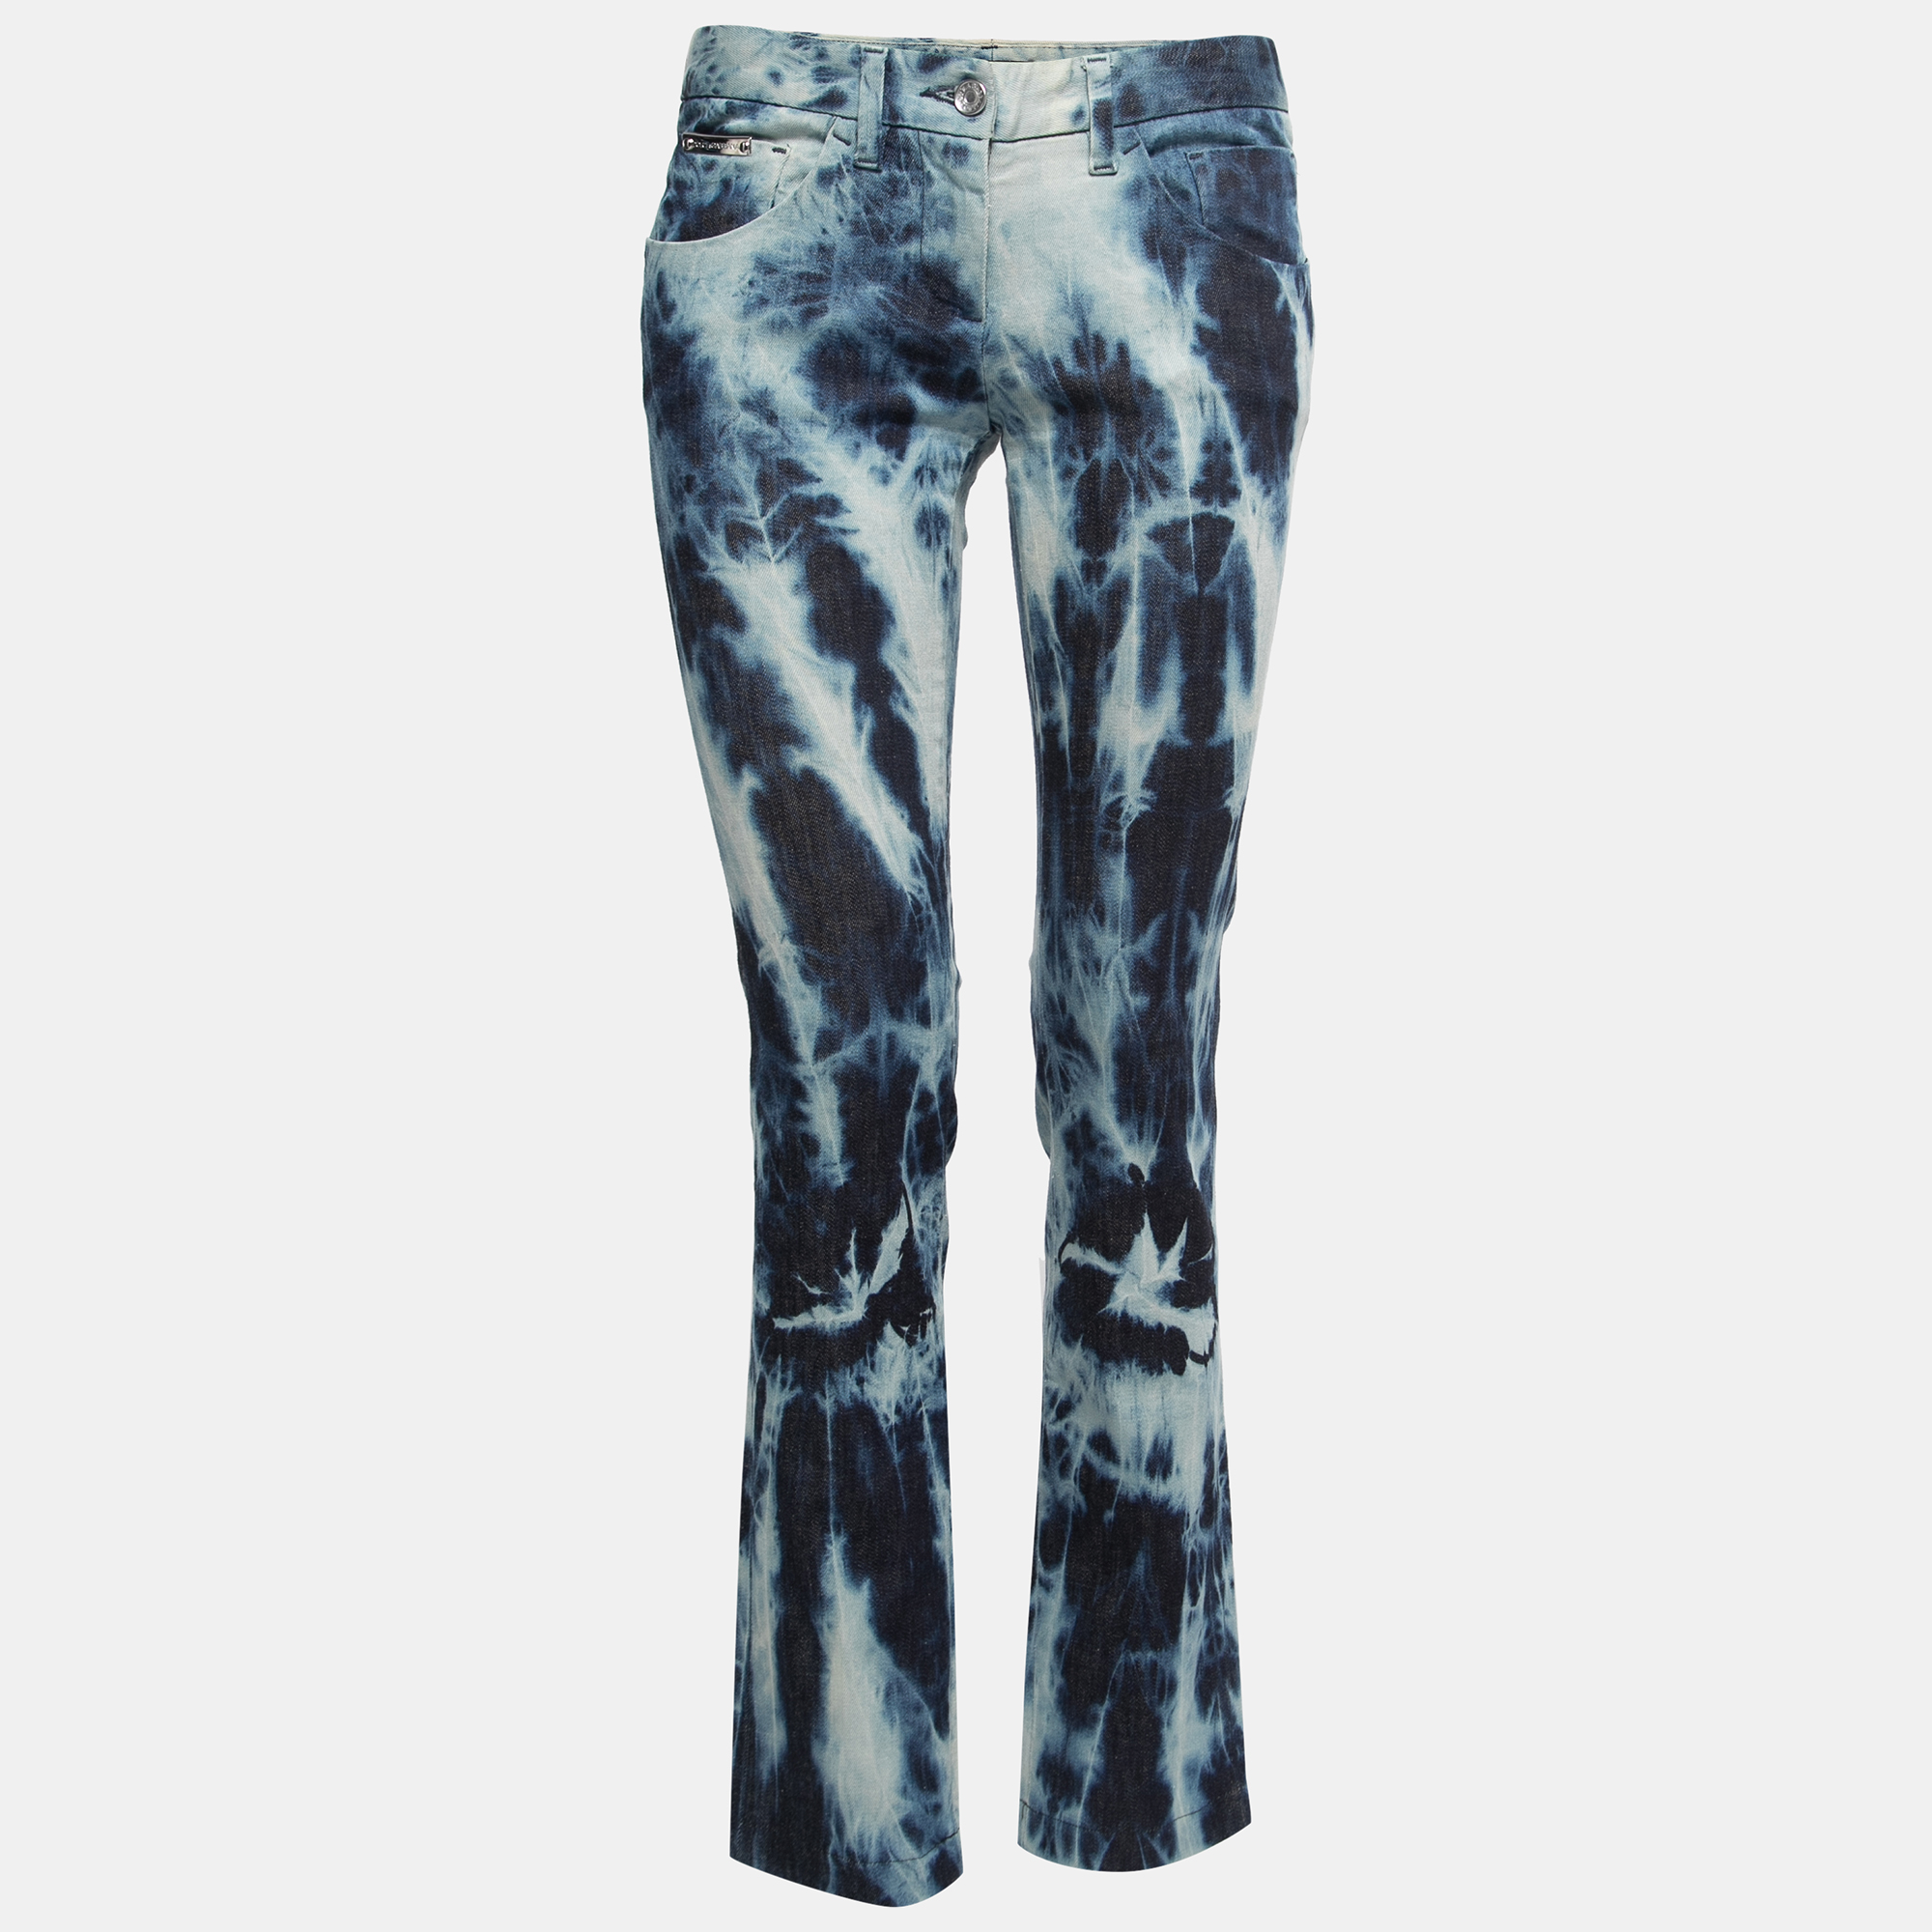 Pre-owned Dolce & Gabbana Blue Tye-dye Denim Jeans S Waist 30"